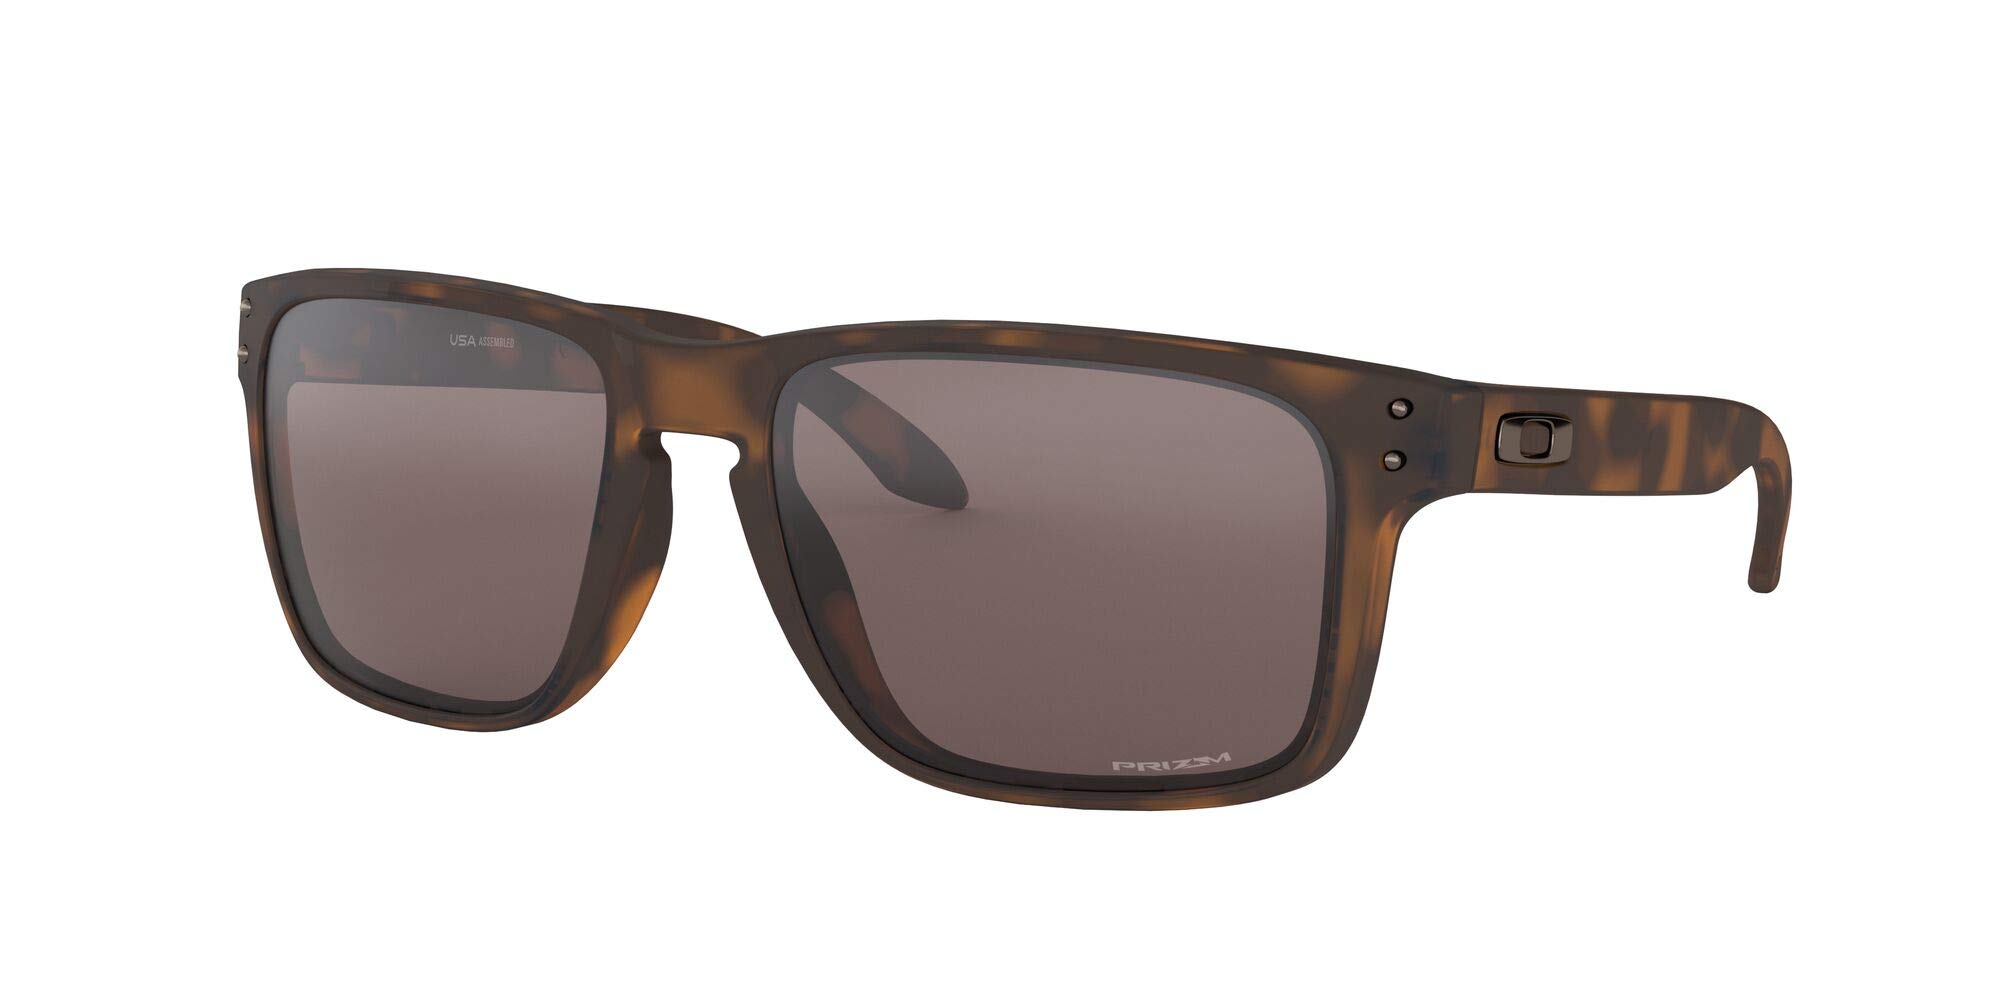 Oakley Men's Holbrook XL Square Sunglasses (Matte Brown Tortise/Prizm Black)  $81 + Free Shipping